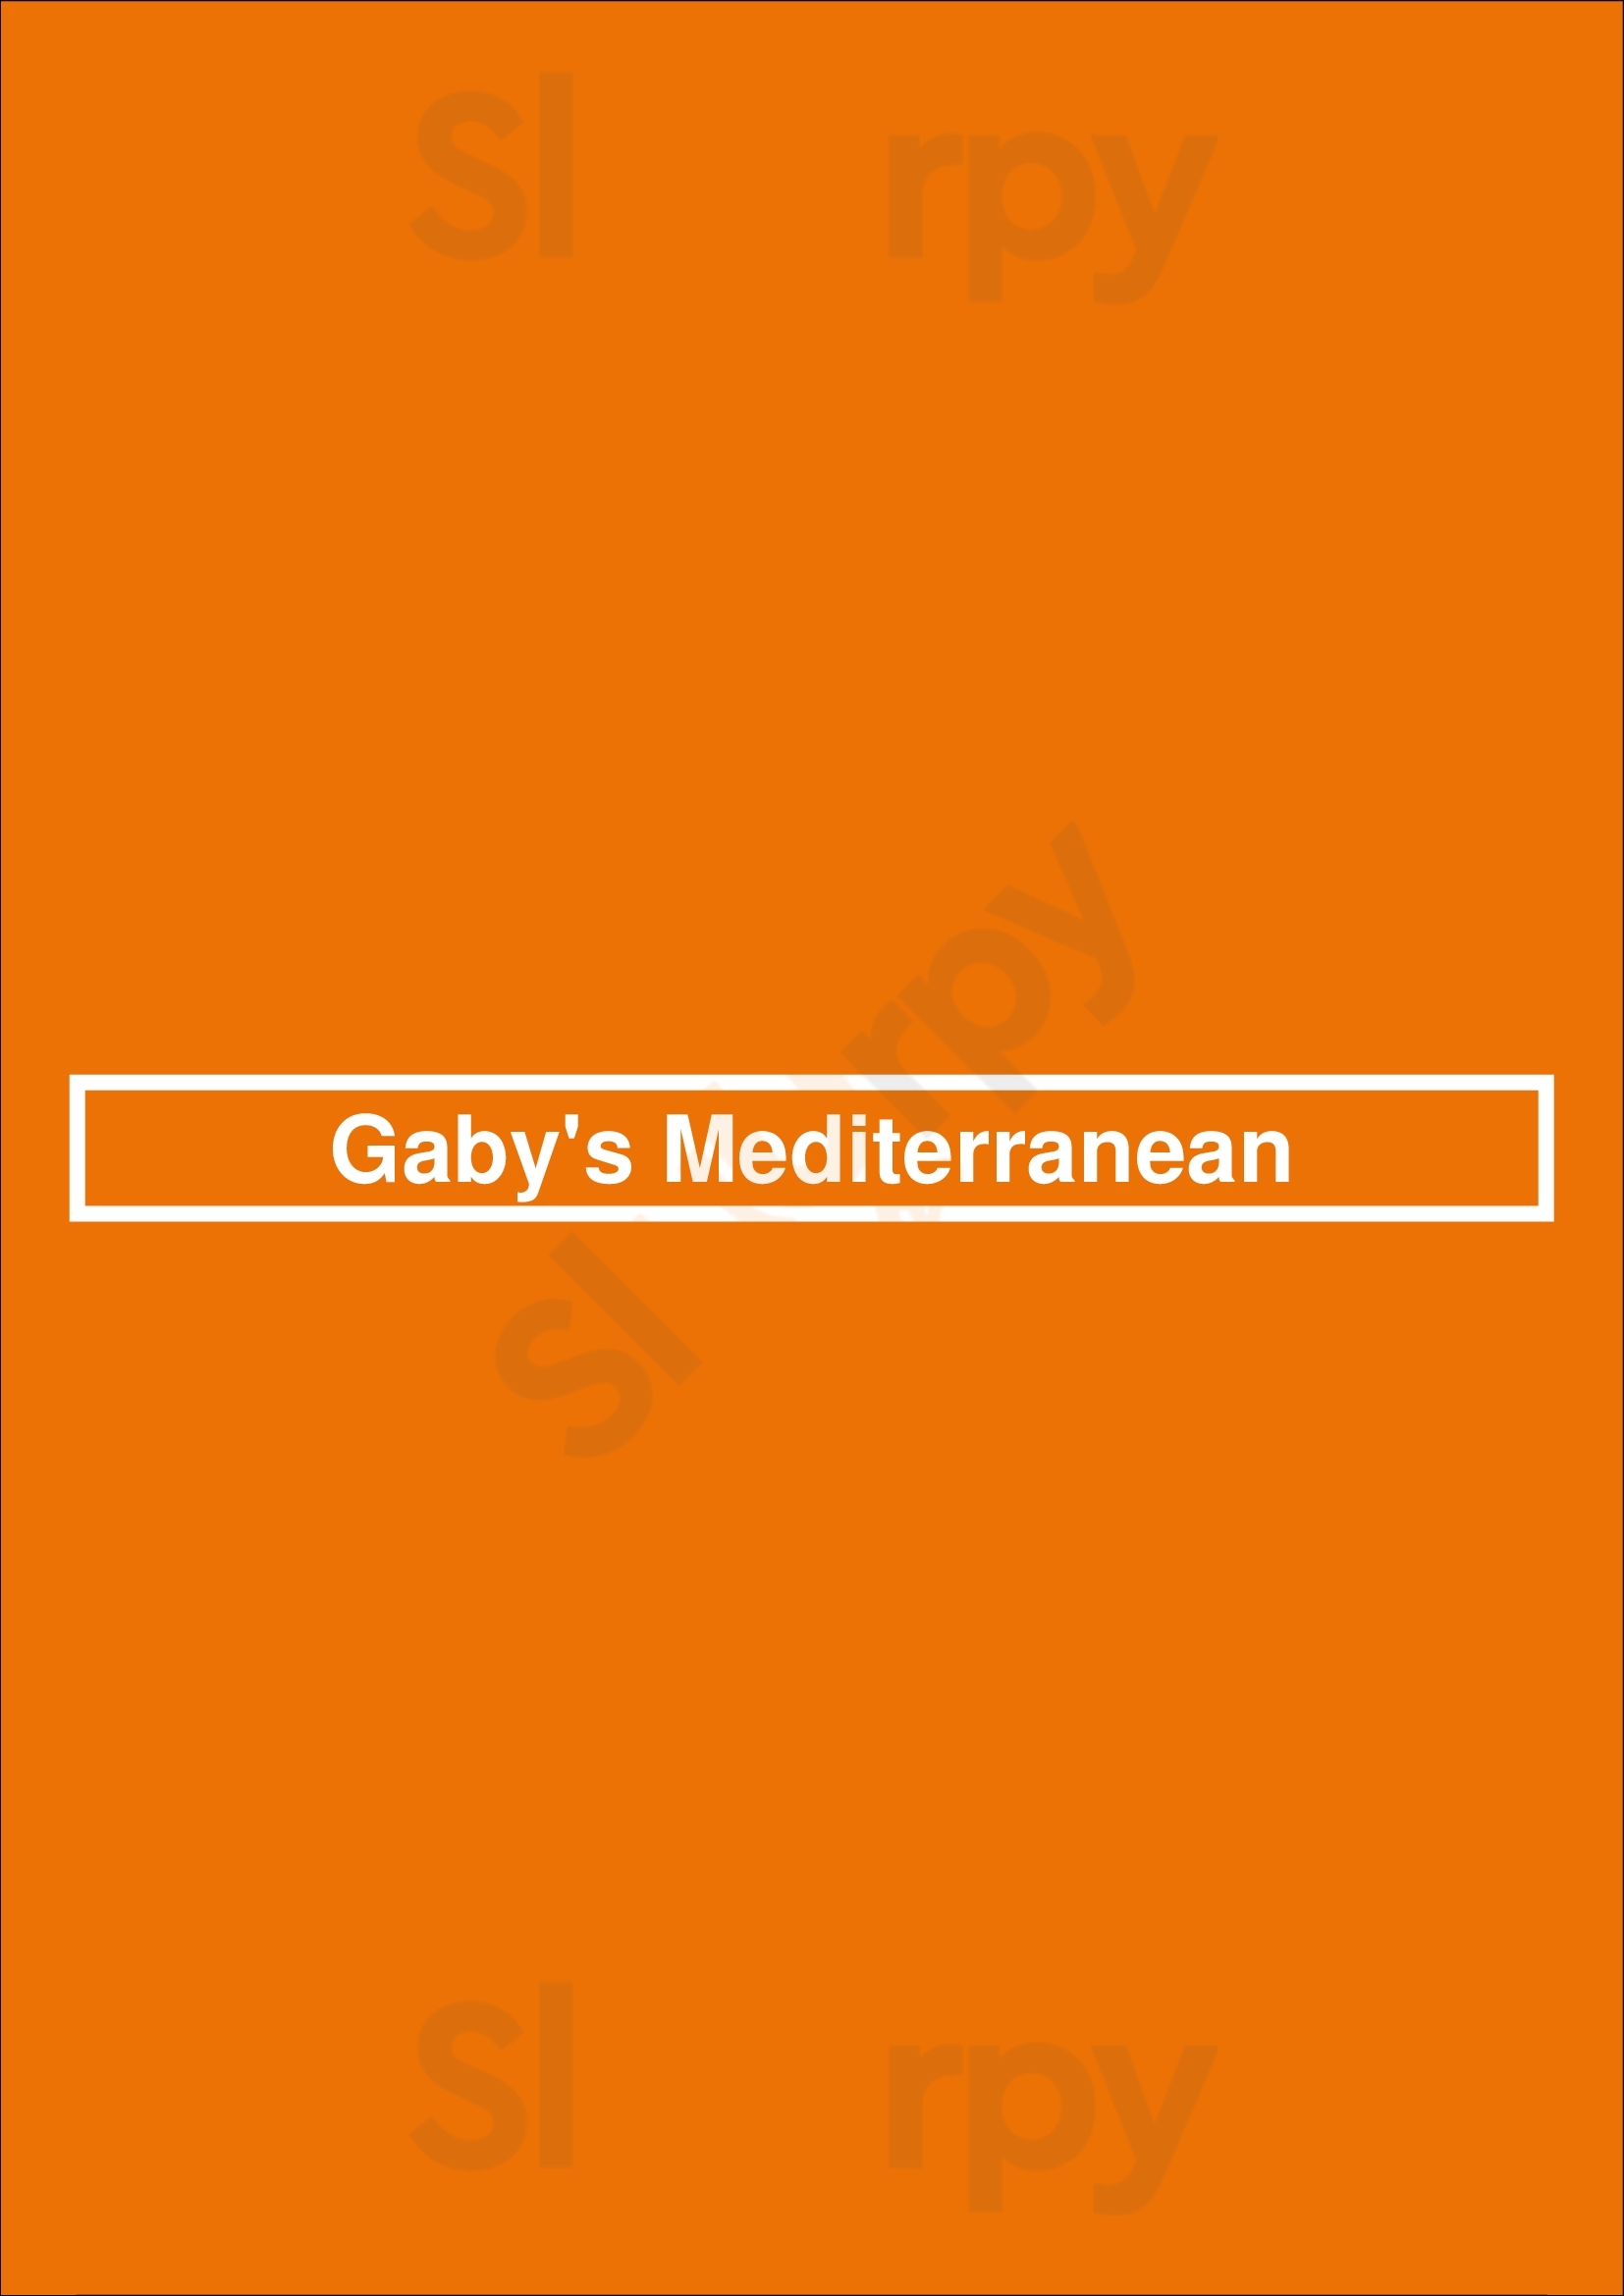 Gaby's Mediterranean Los Angeles Menu - 1